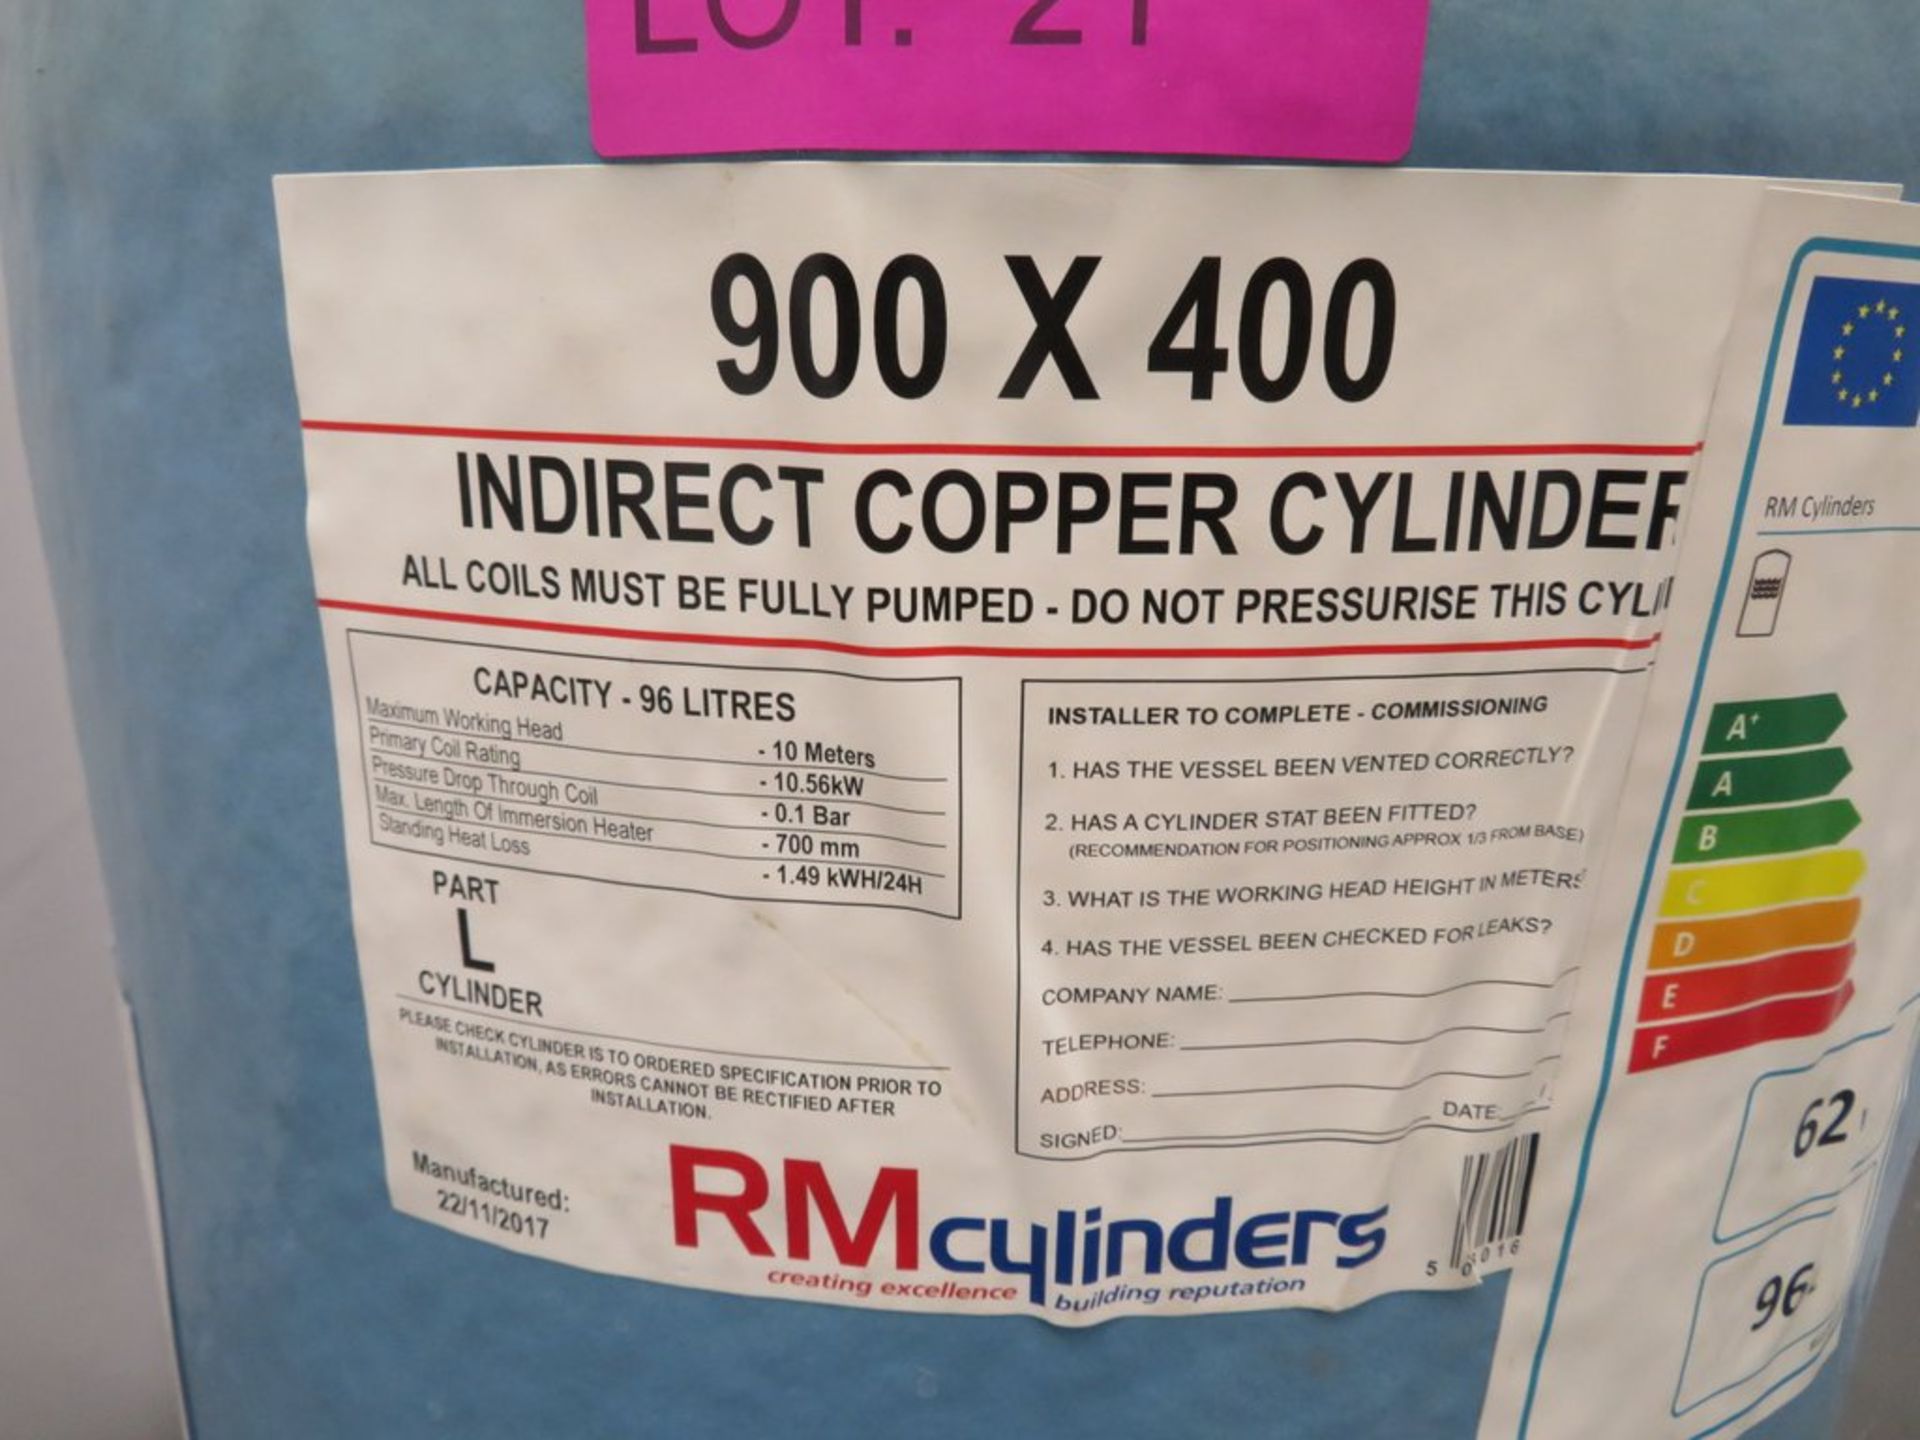 Indirect Copper Cylinder Hot Water Tank. 900 x 400. 96L Capacity. - Bild 4 aus 5